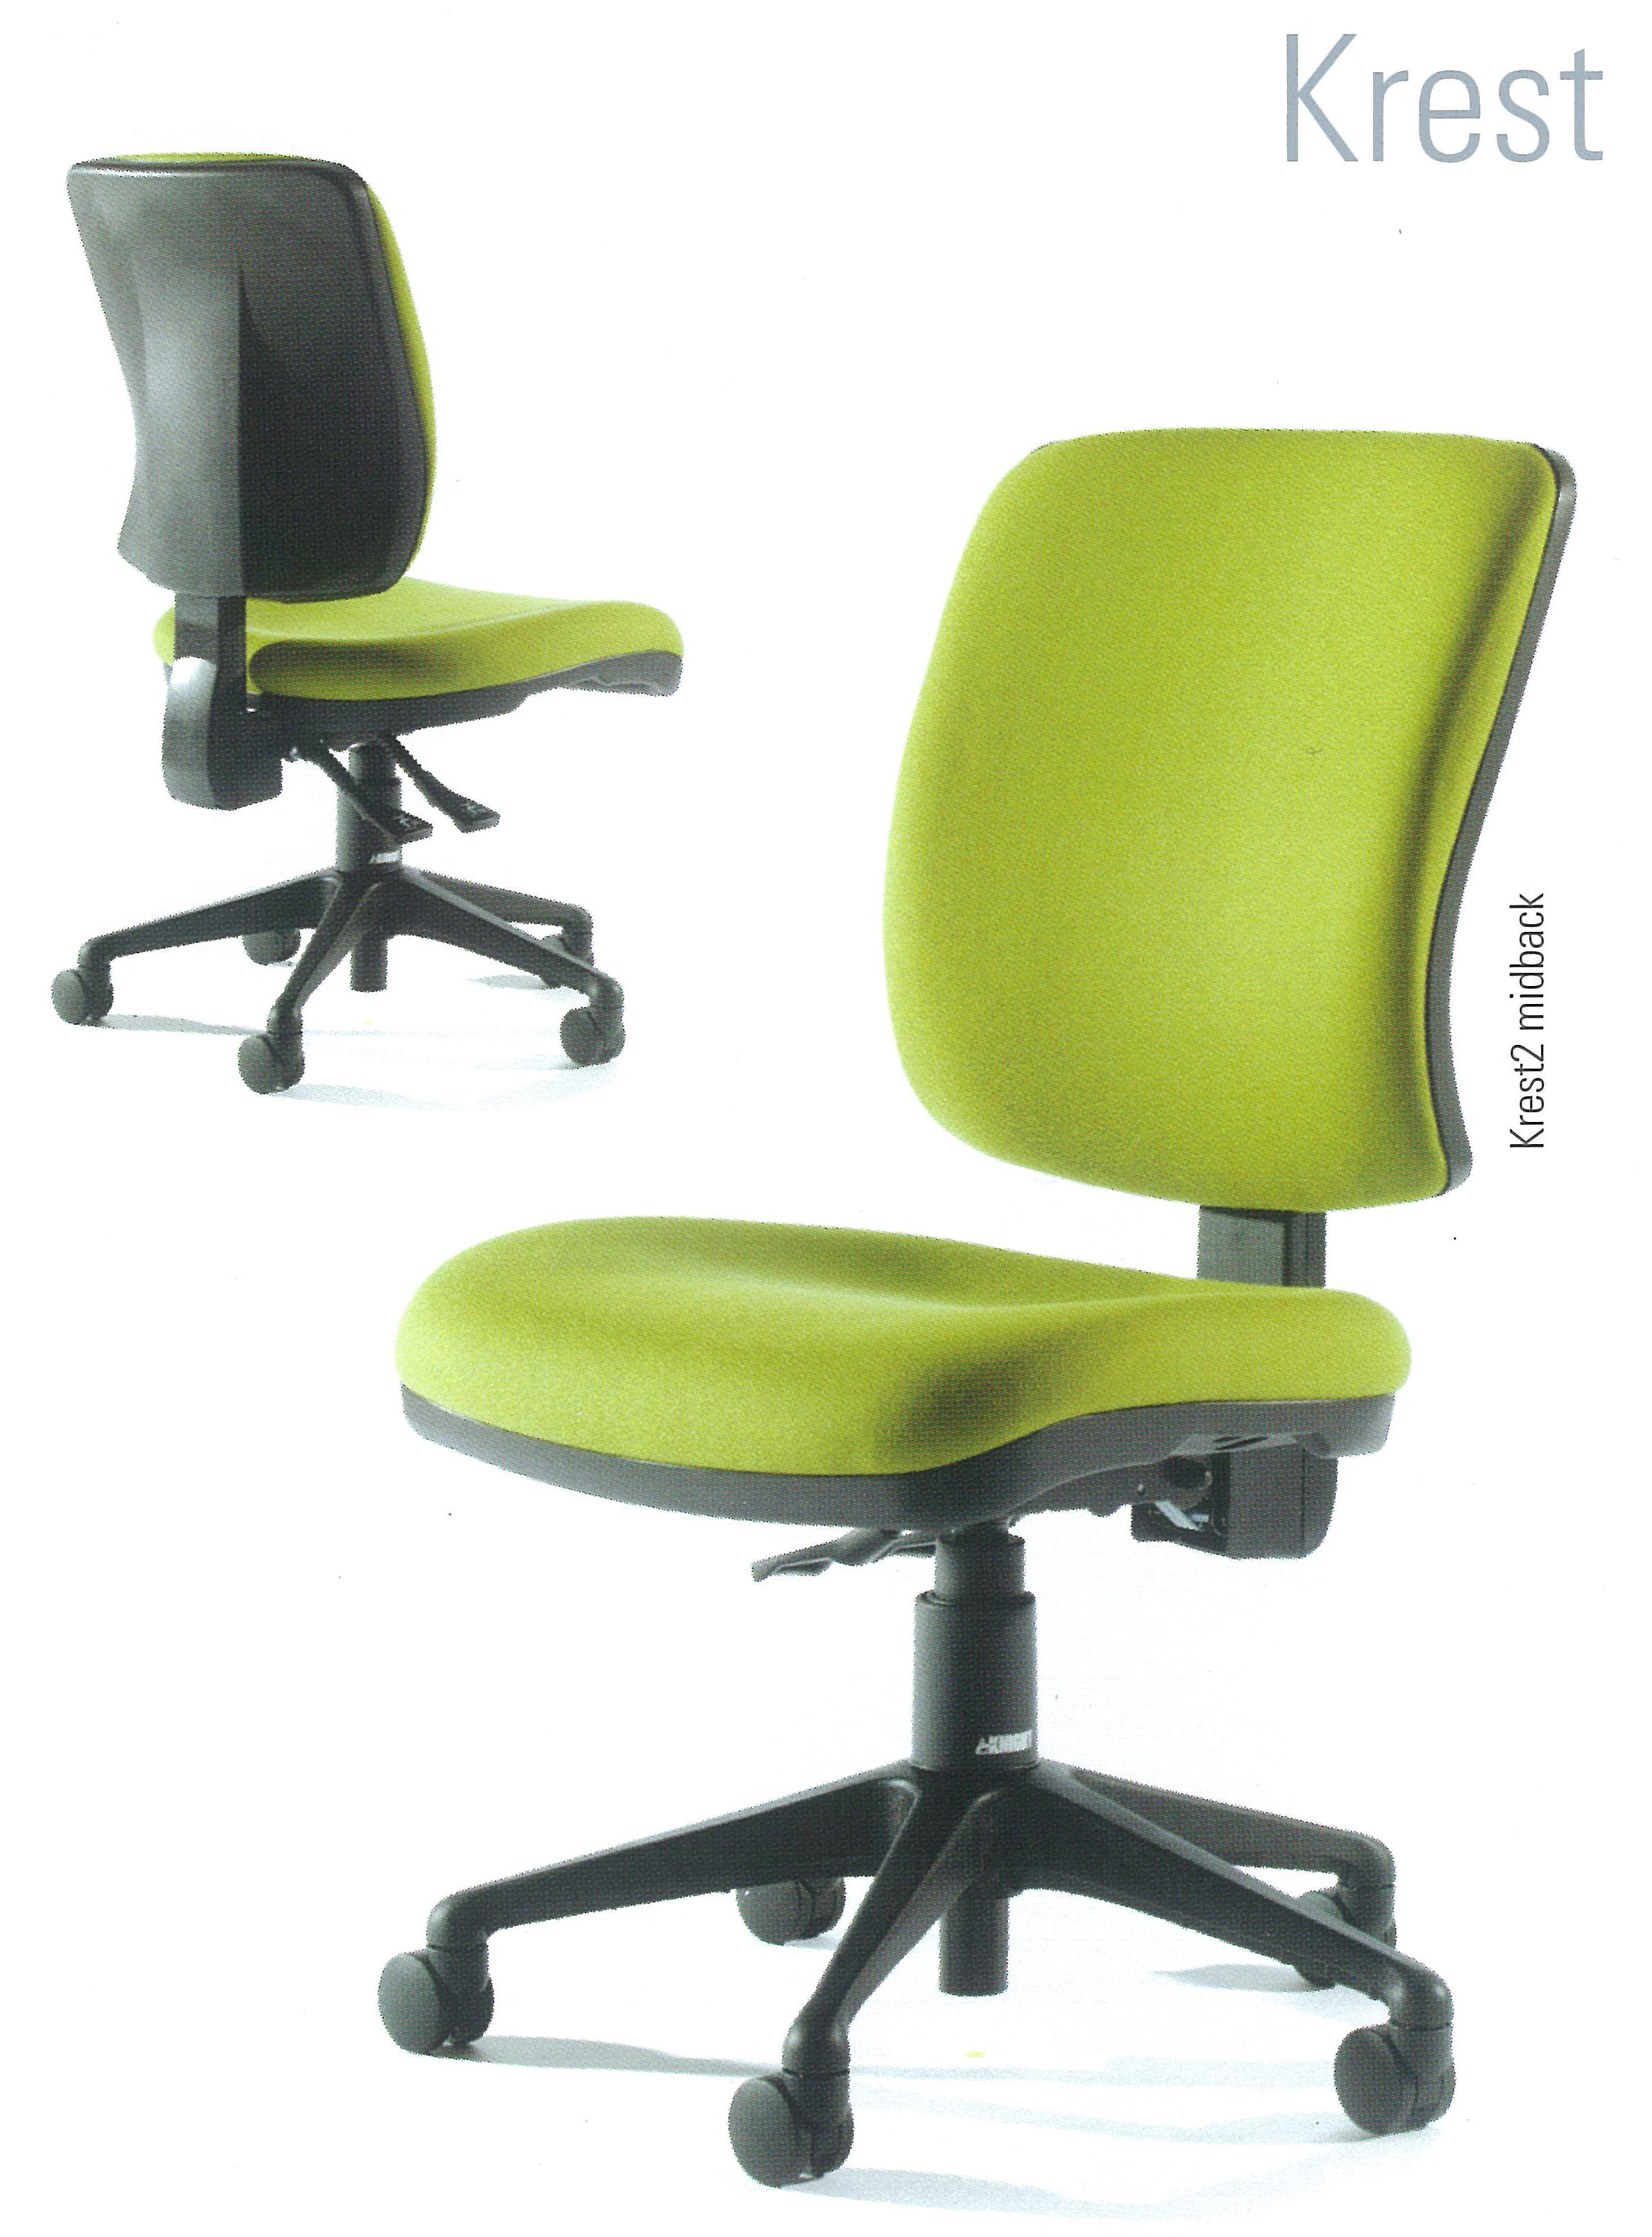 Krest2 Midback Office Chair